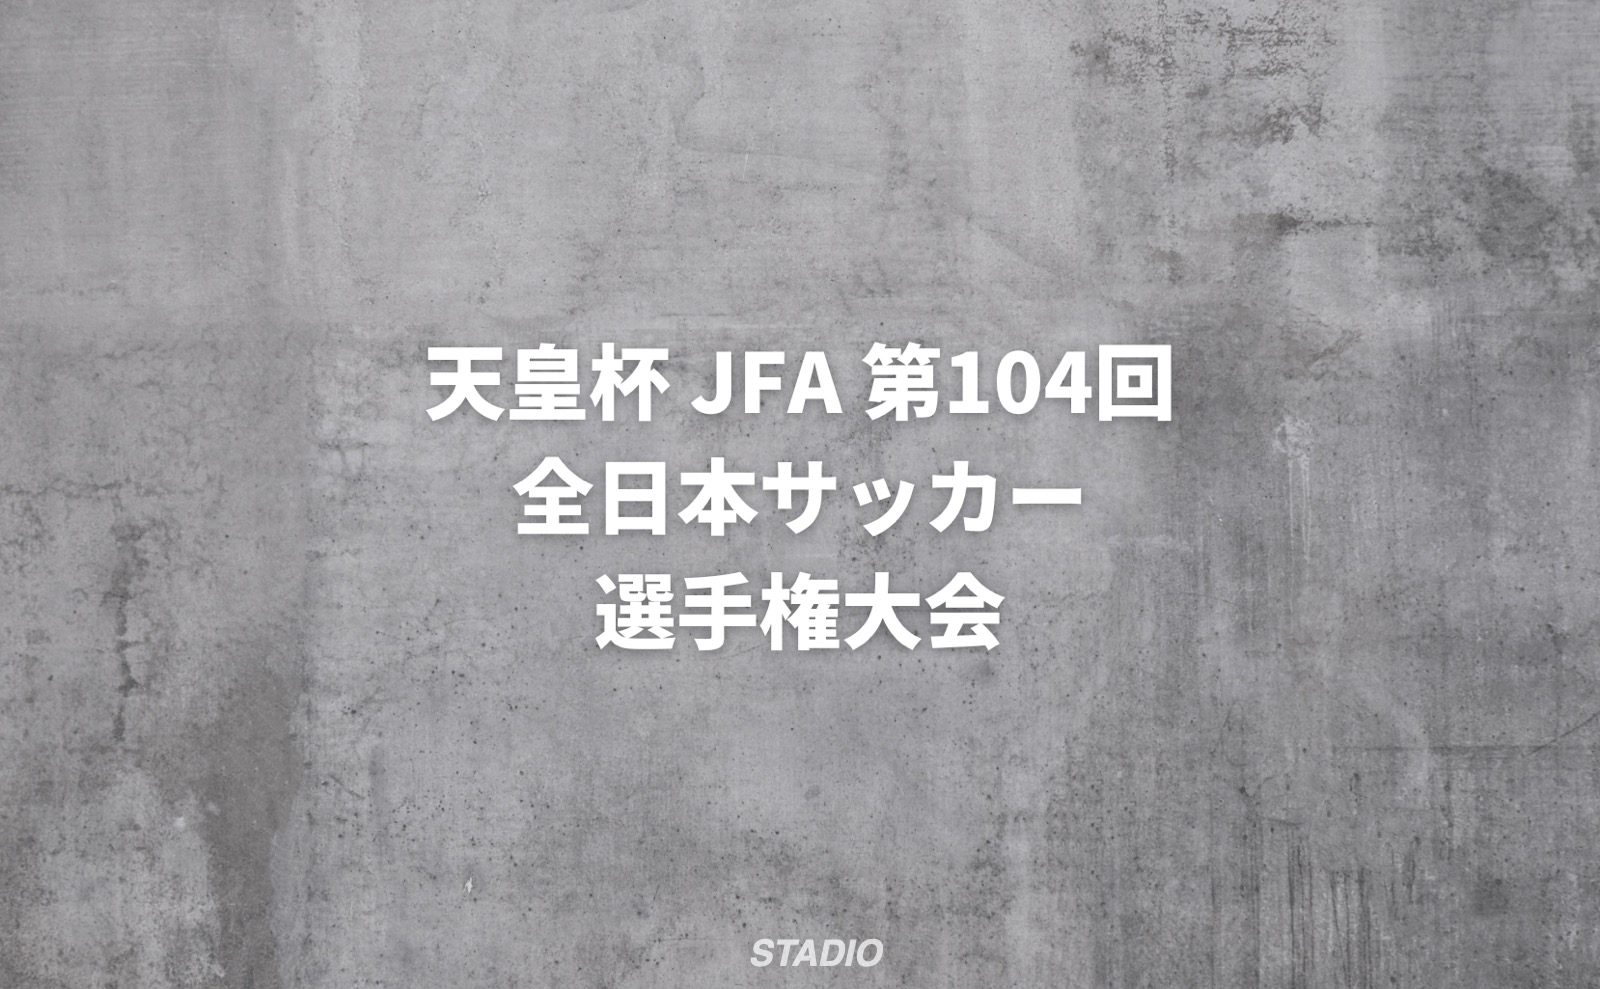 天皇杯JFA第104回全日本サッカー選手権大会